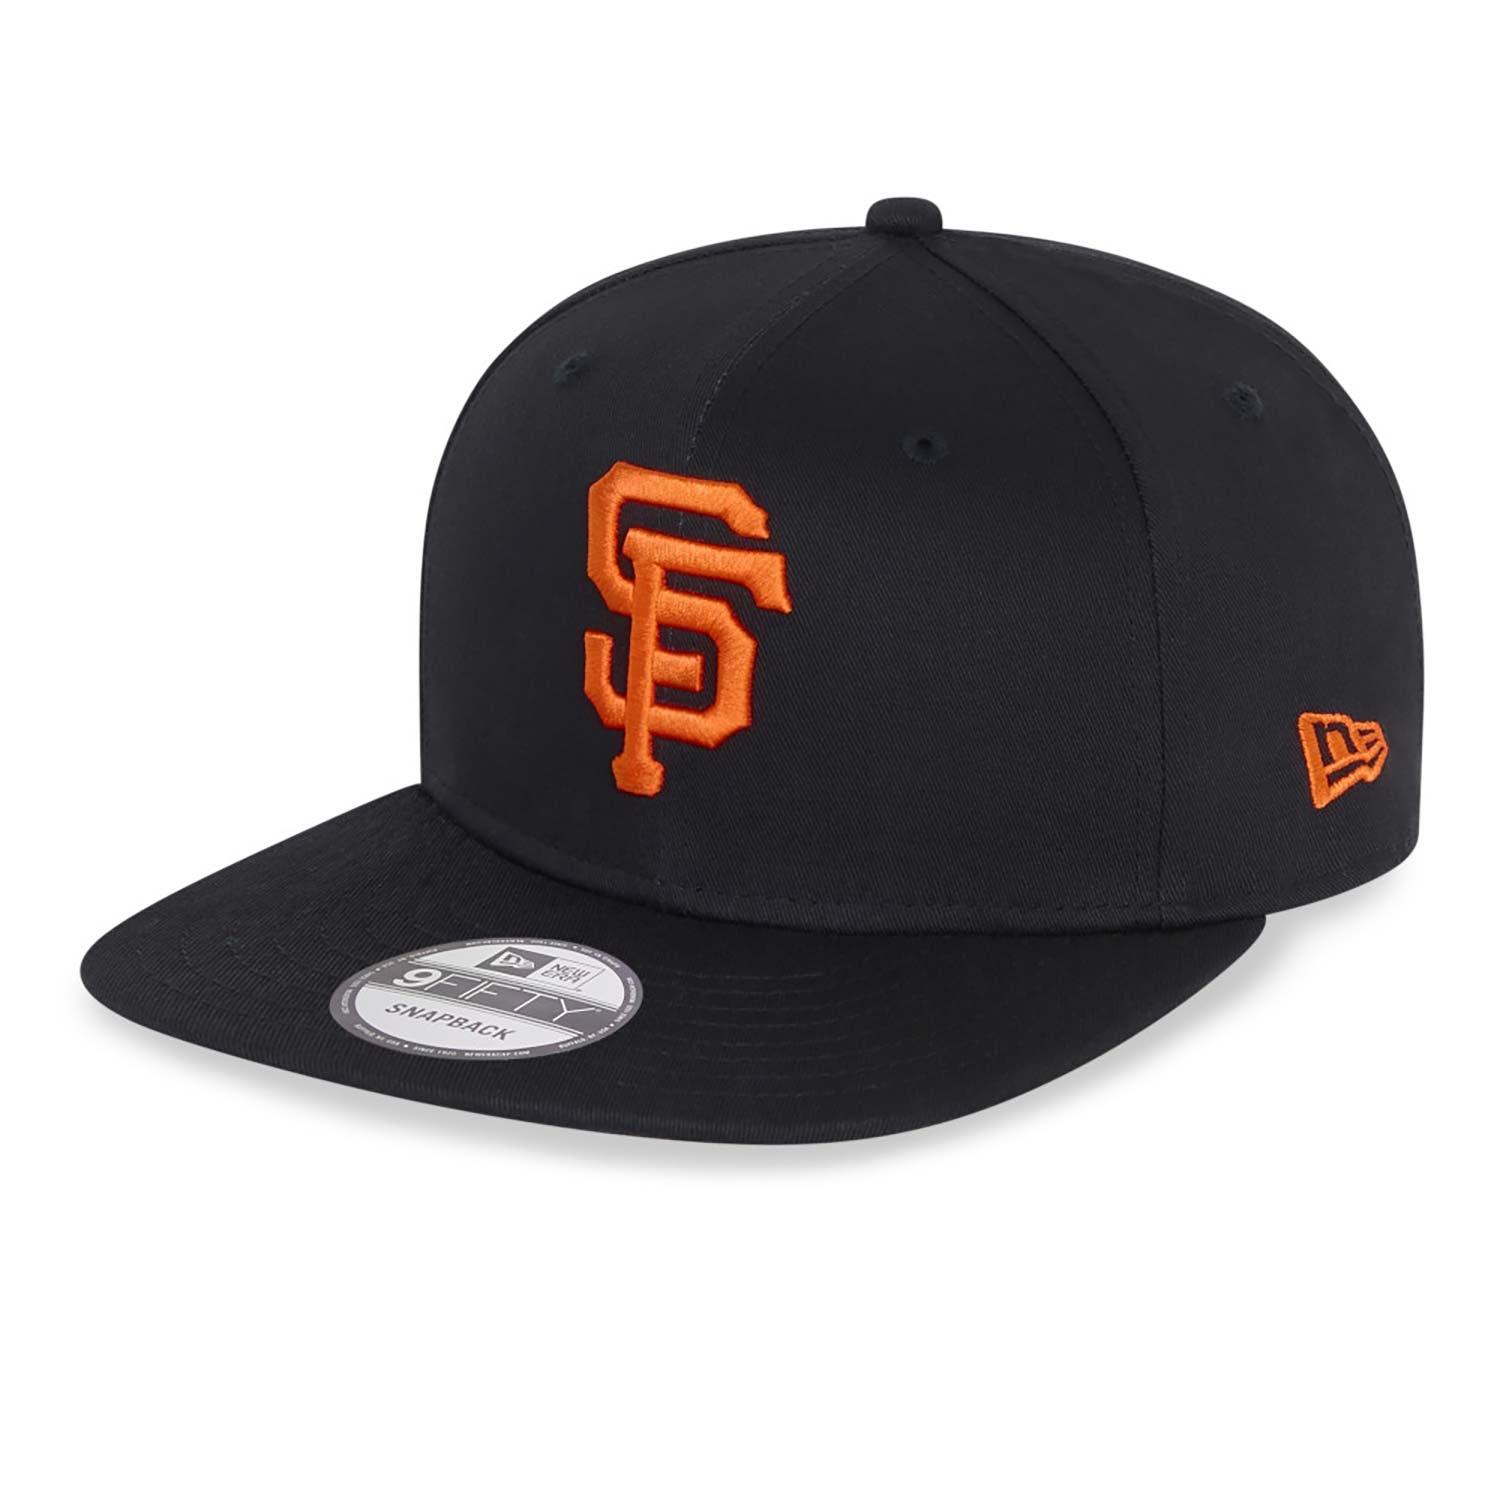 Official New Era MLB Essential San Francisco Giants Black 9FIFTY Cap ...